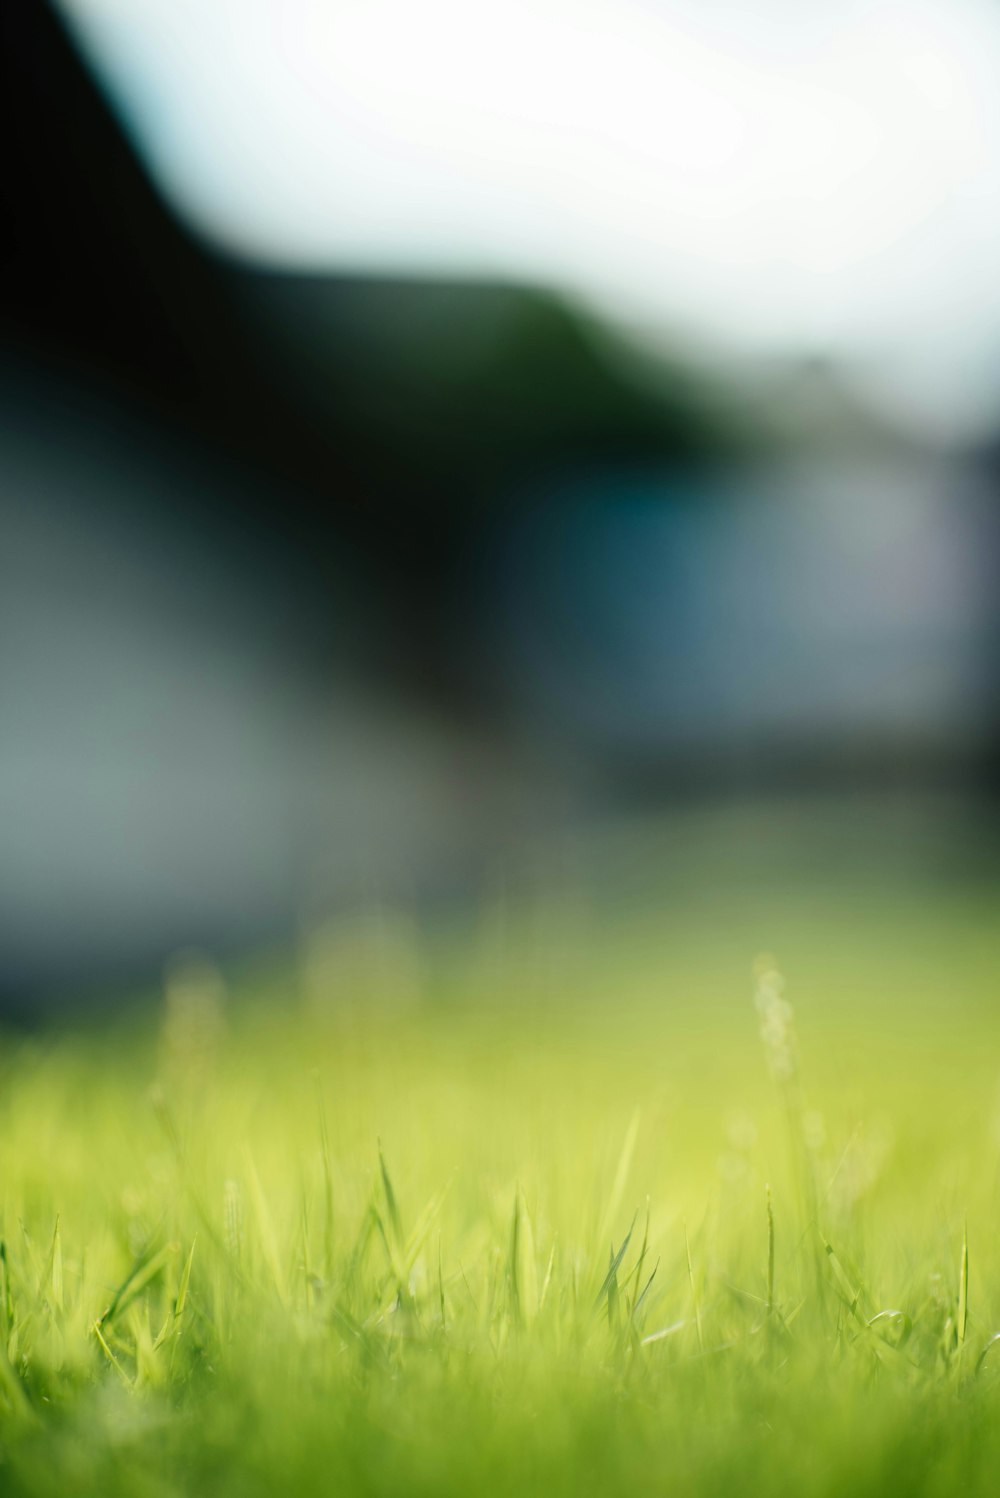 a blurry photo of a green field of grass